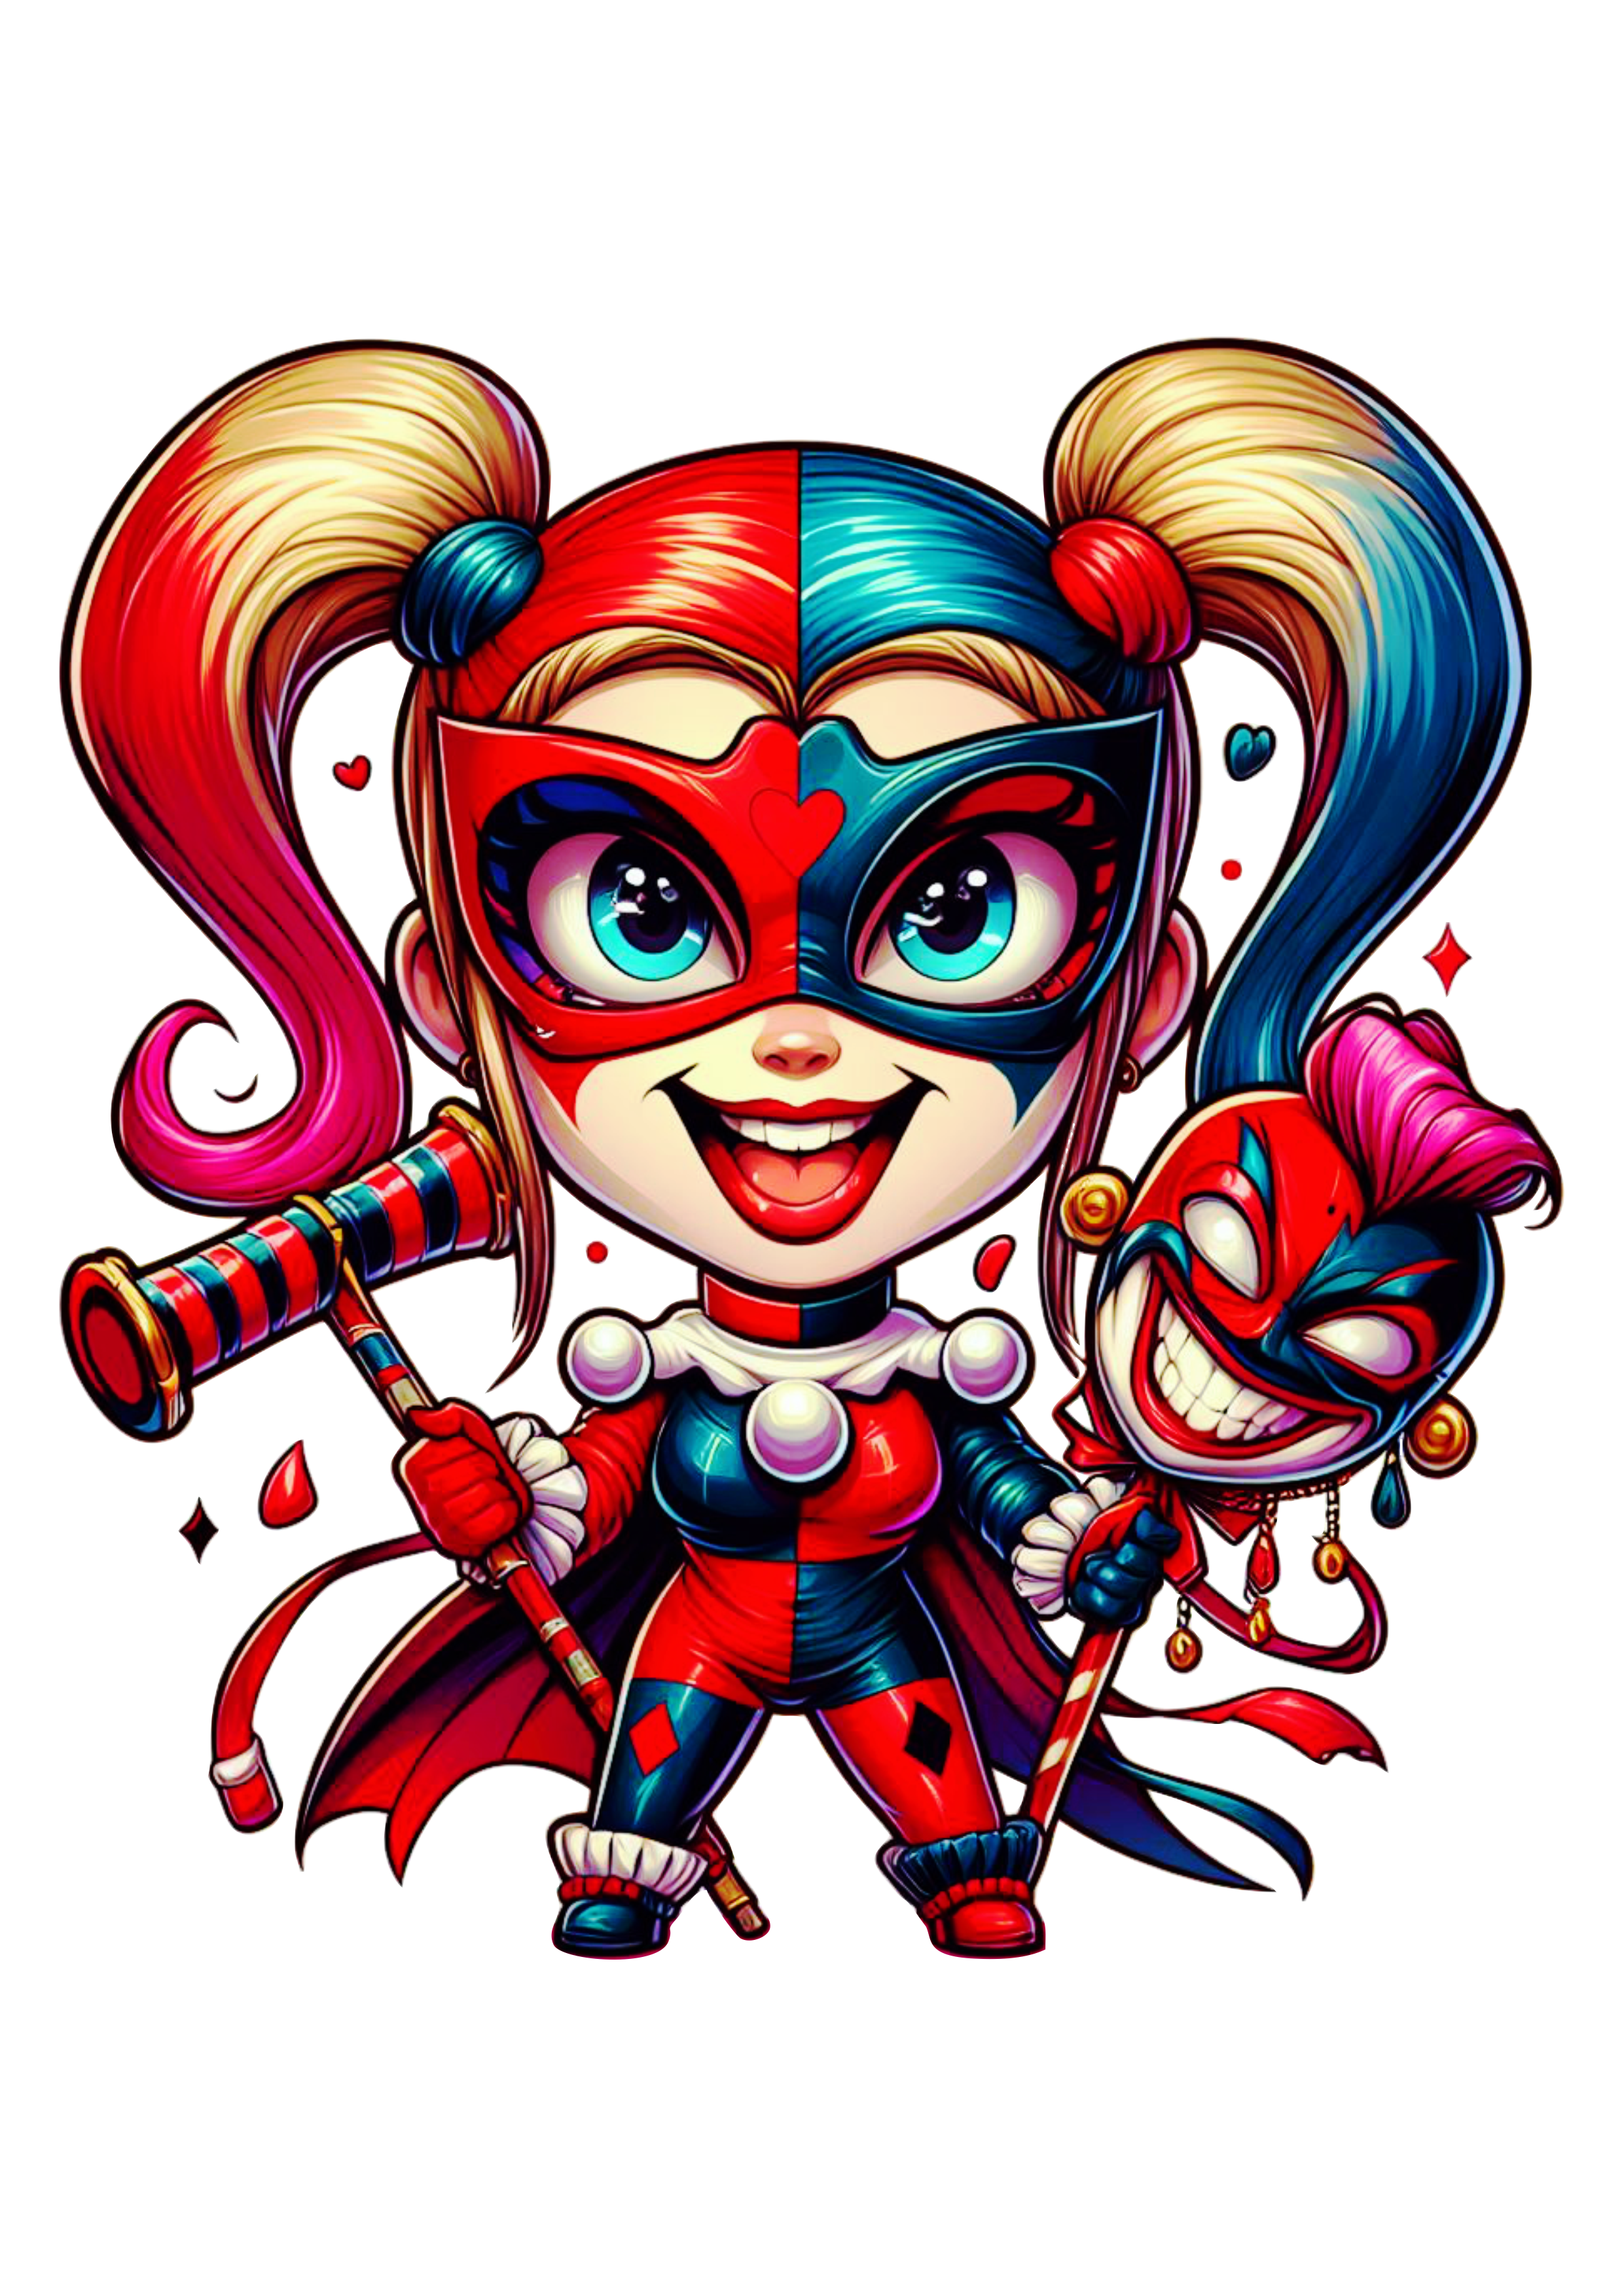 Arlequina Harley Quinn fantasia de carnaval png imagem desenho fofinho